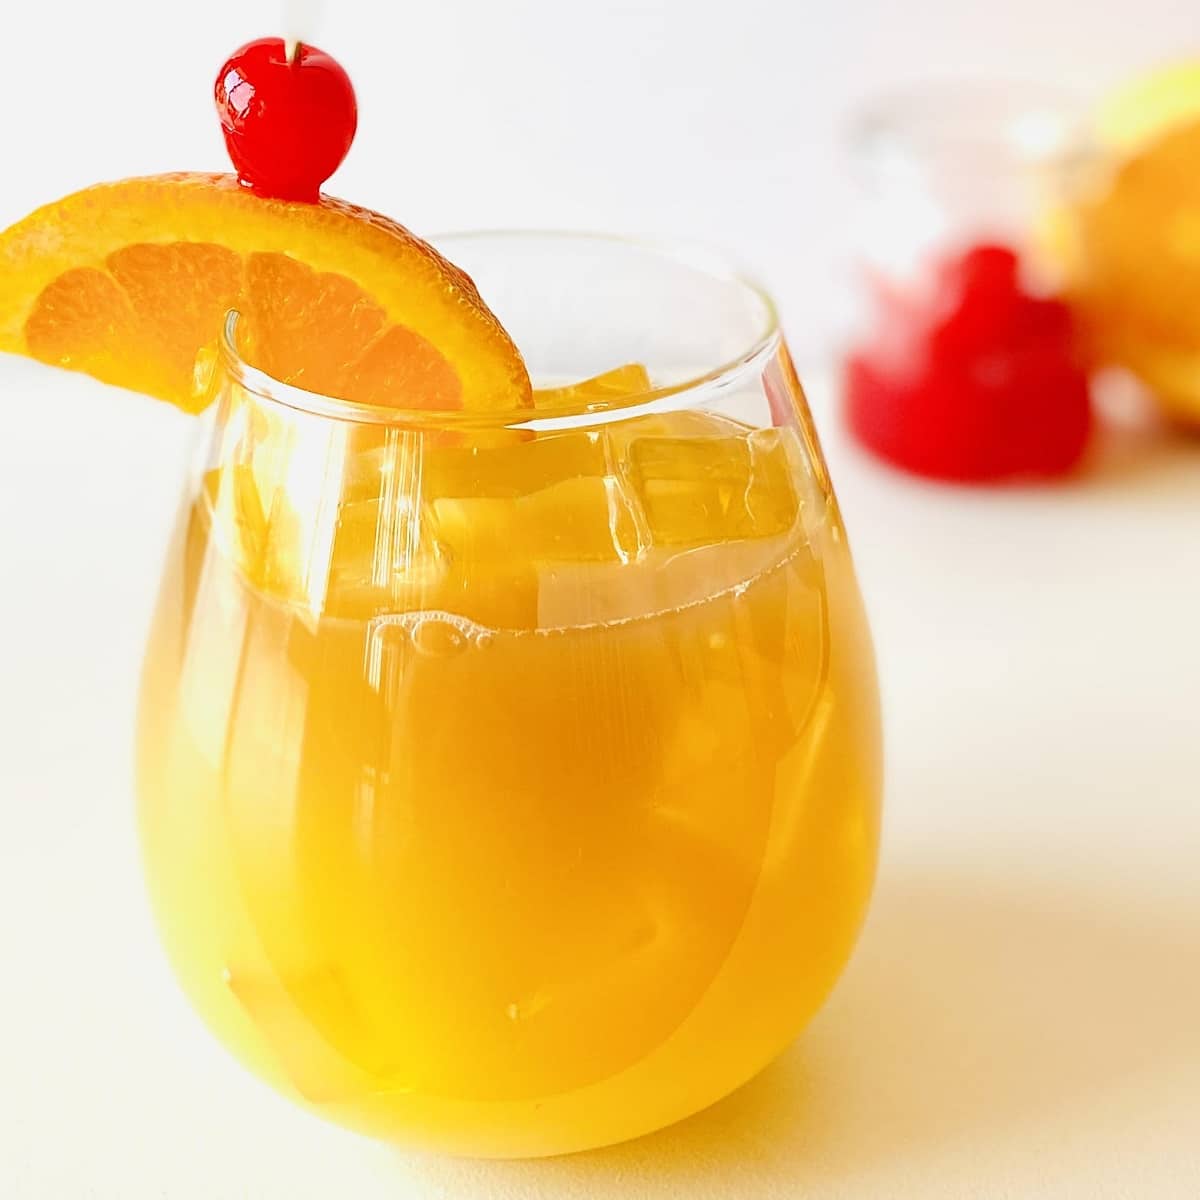 vodka sour recipe garnished with orange and cherry.